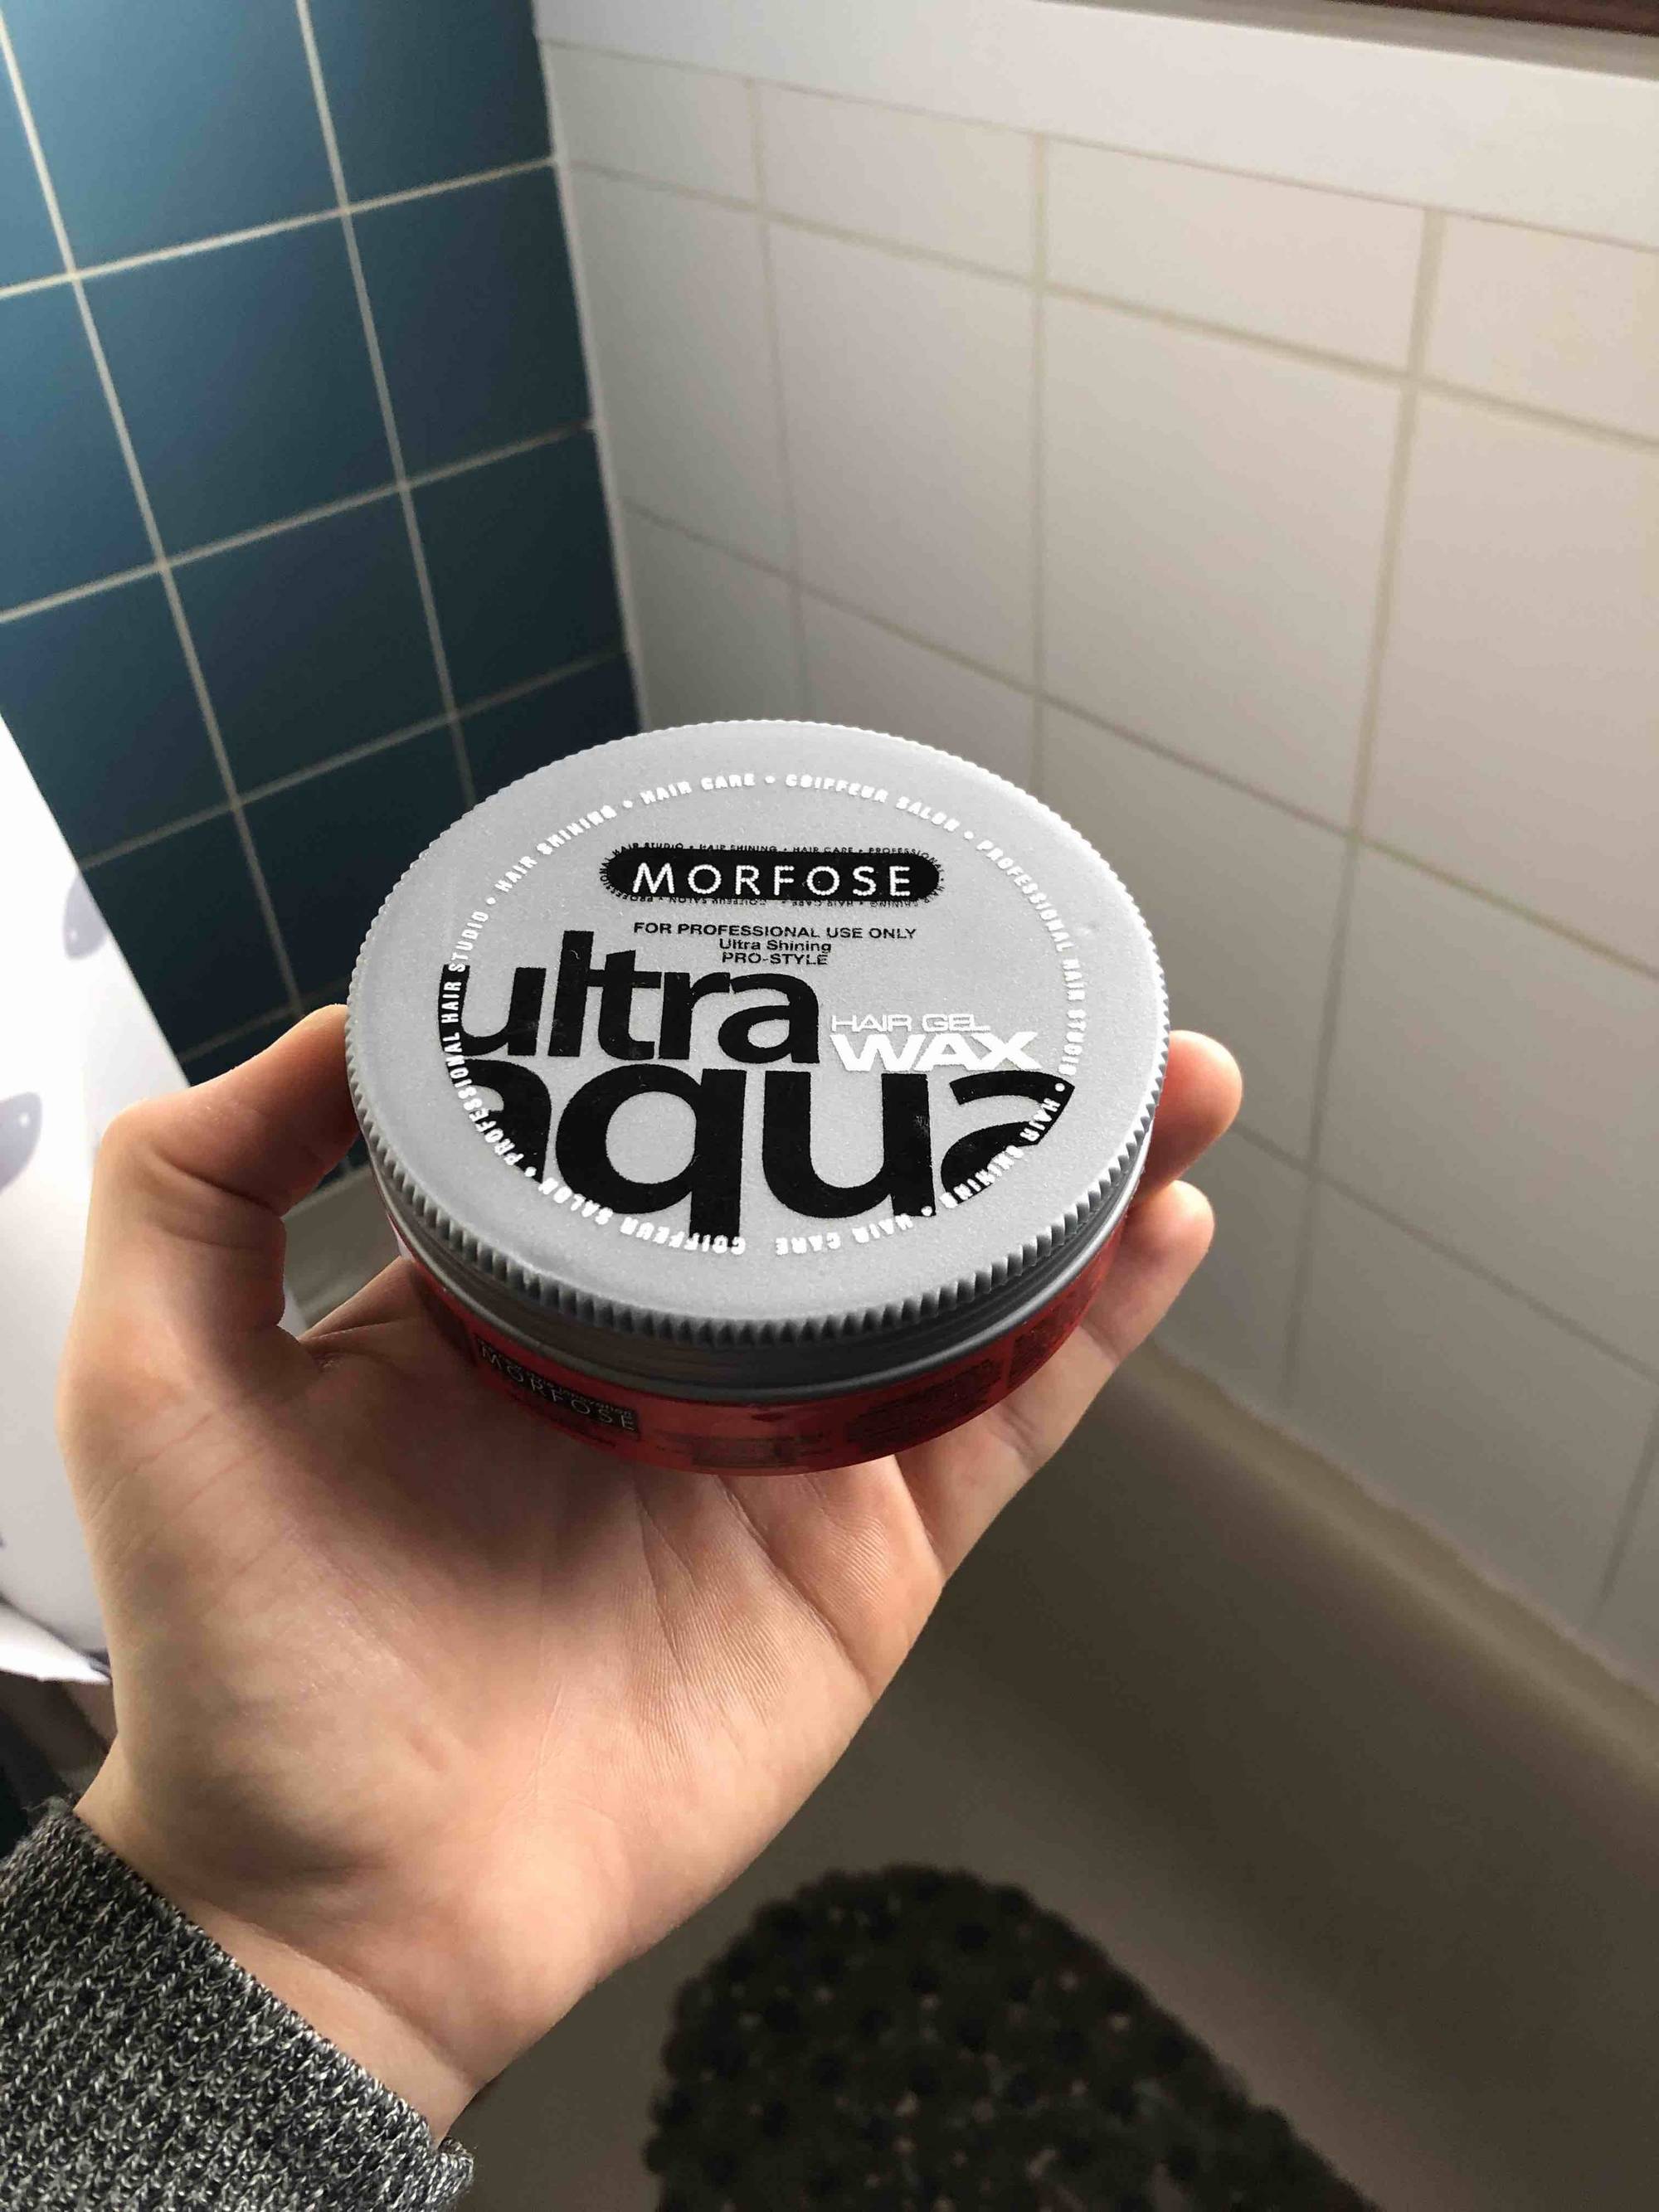 MORFOSE - Ultra aqua hair gel wax